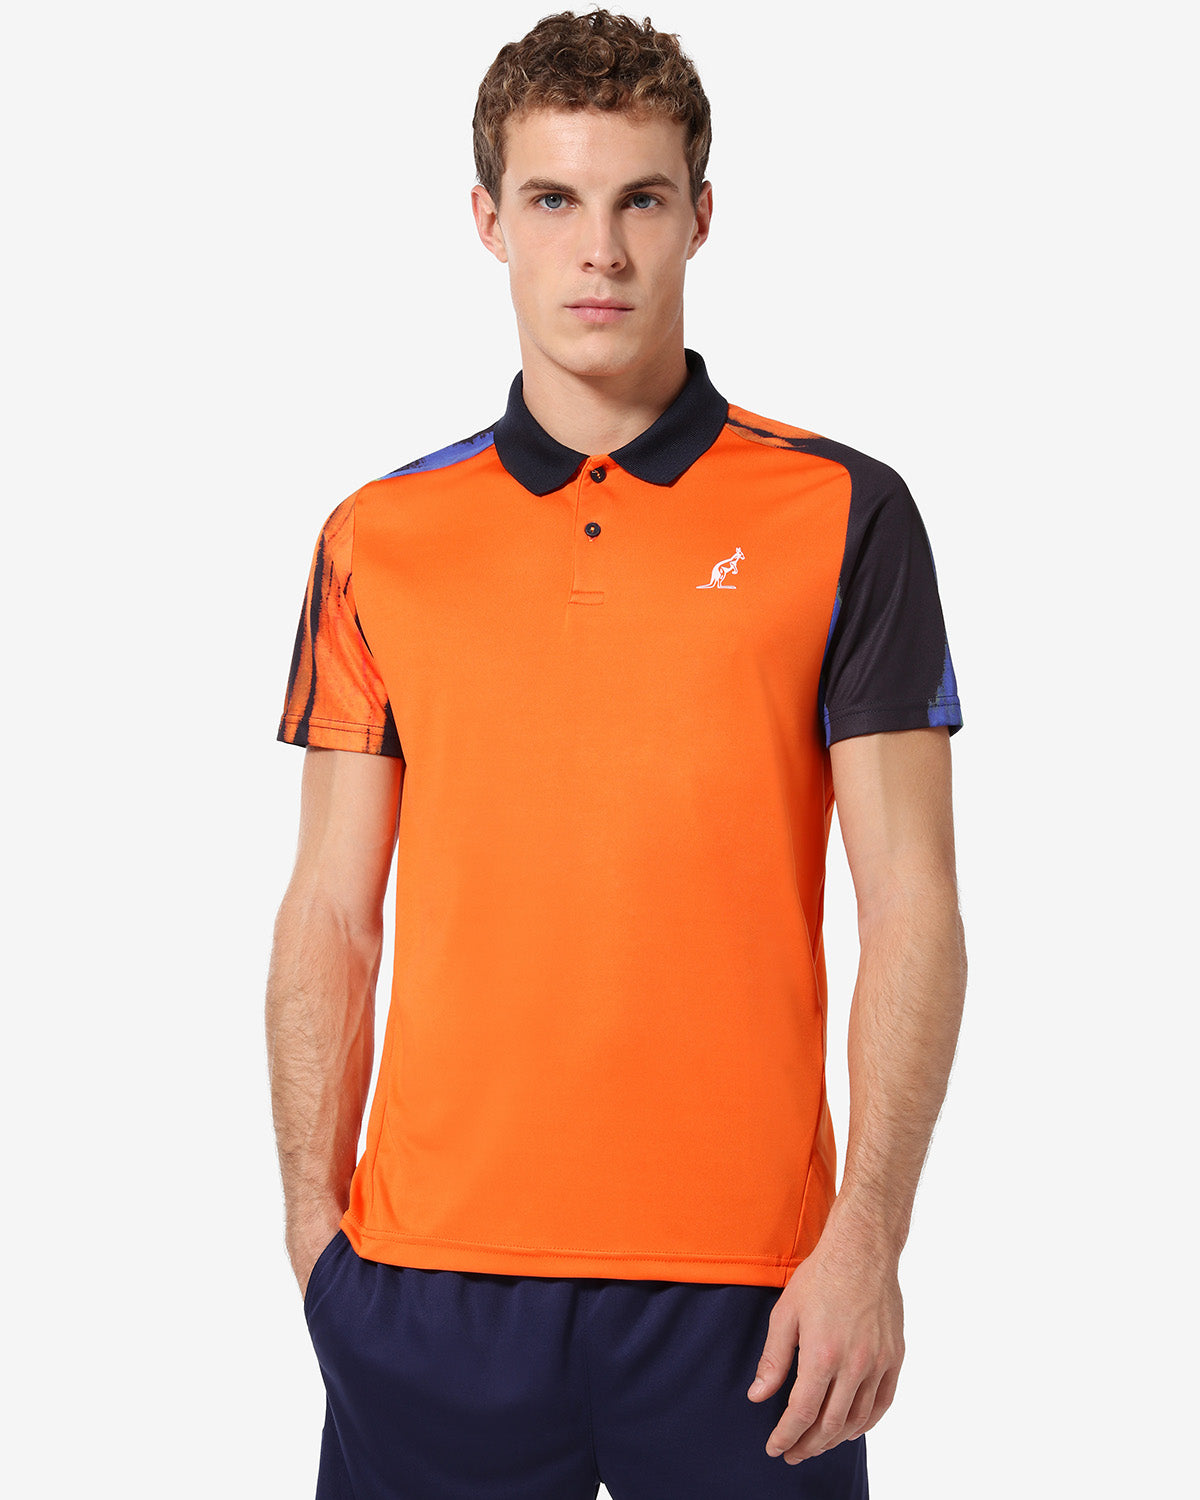 Blaze Polo Shirt: Australian Tennis